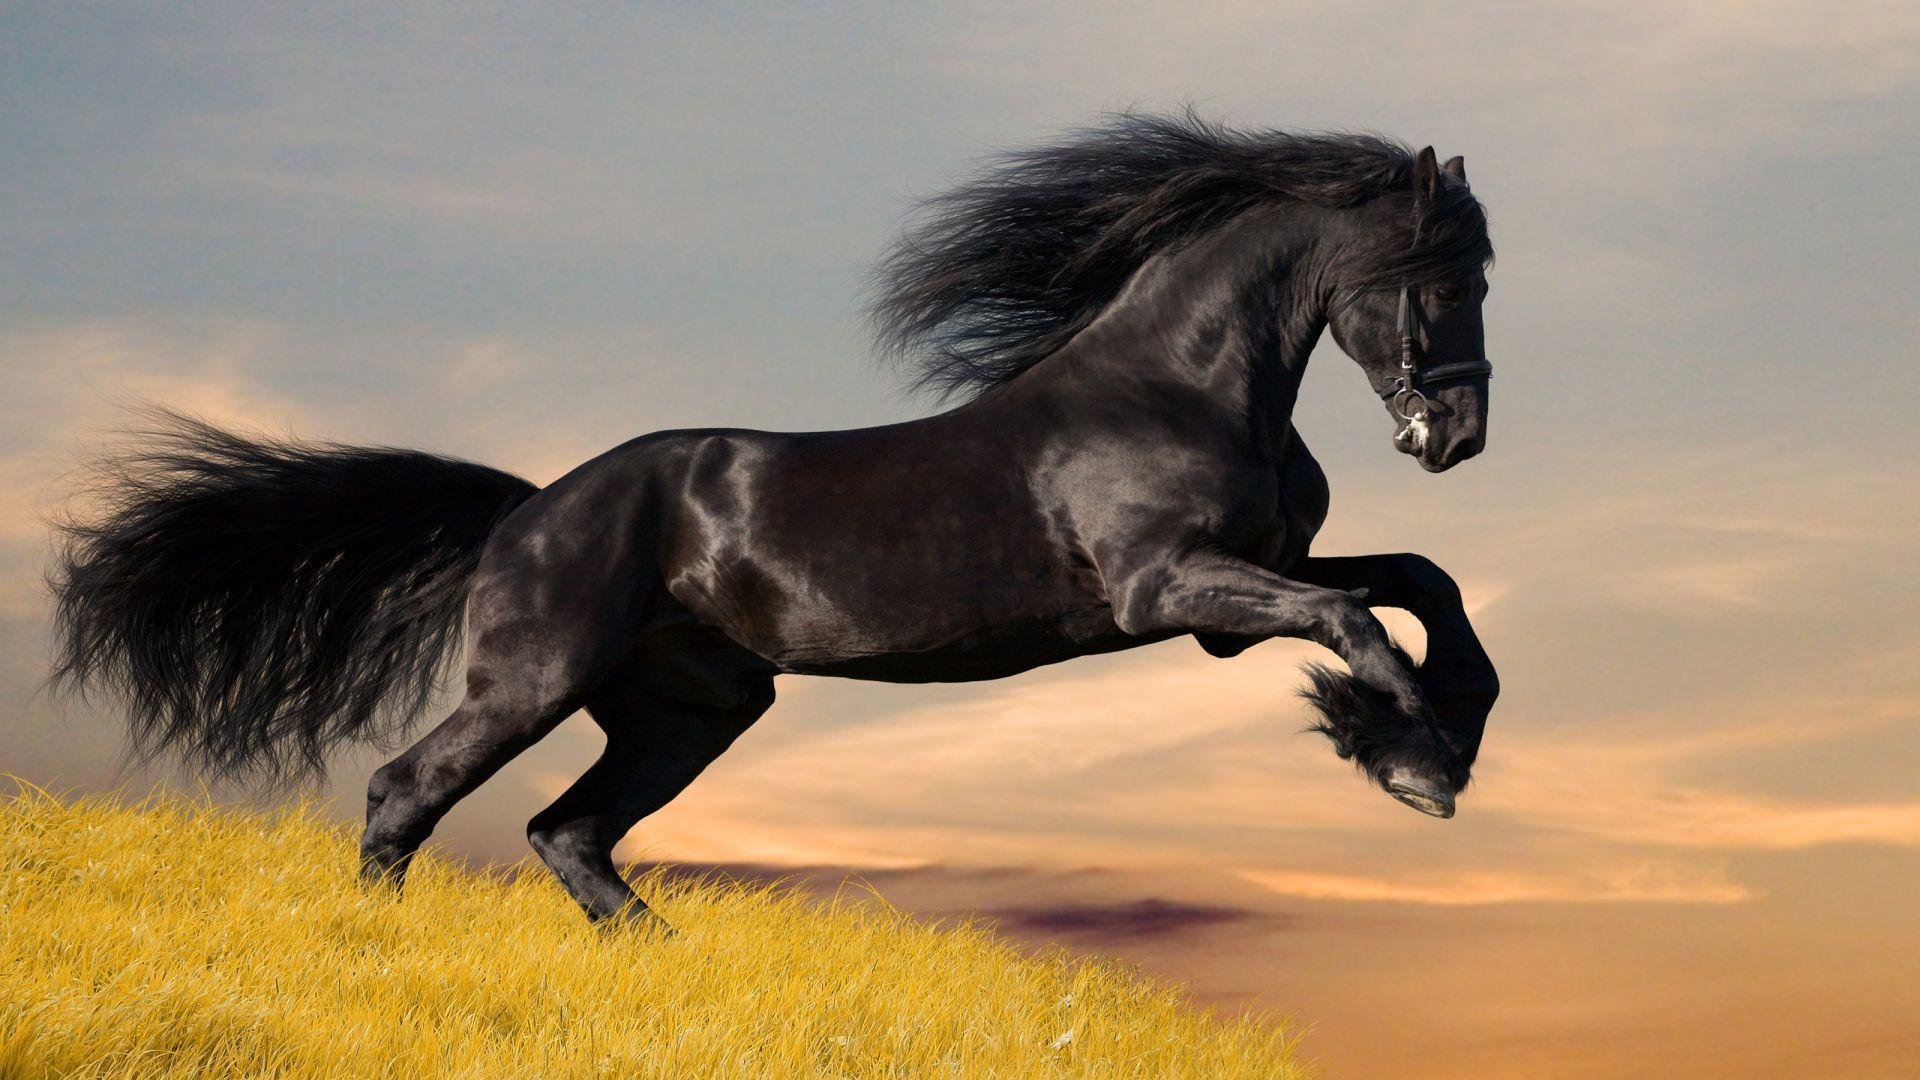 black horse jumping, iPhone Wallpaper, Facebook Cover, Twitter